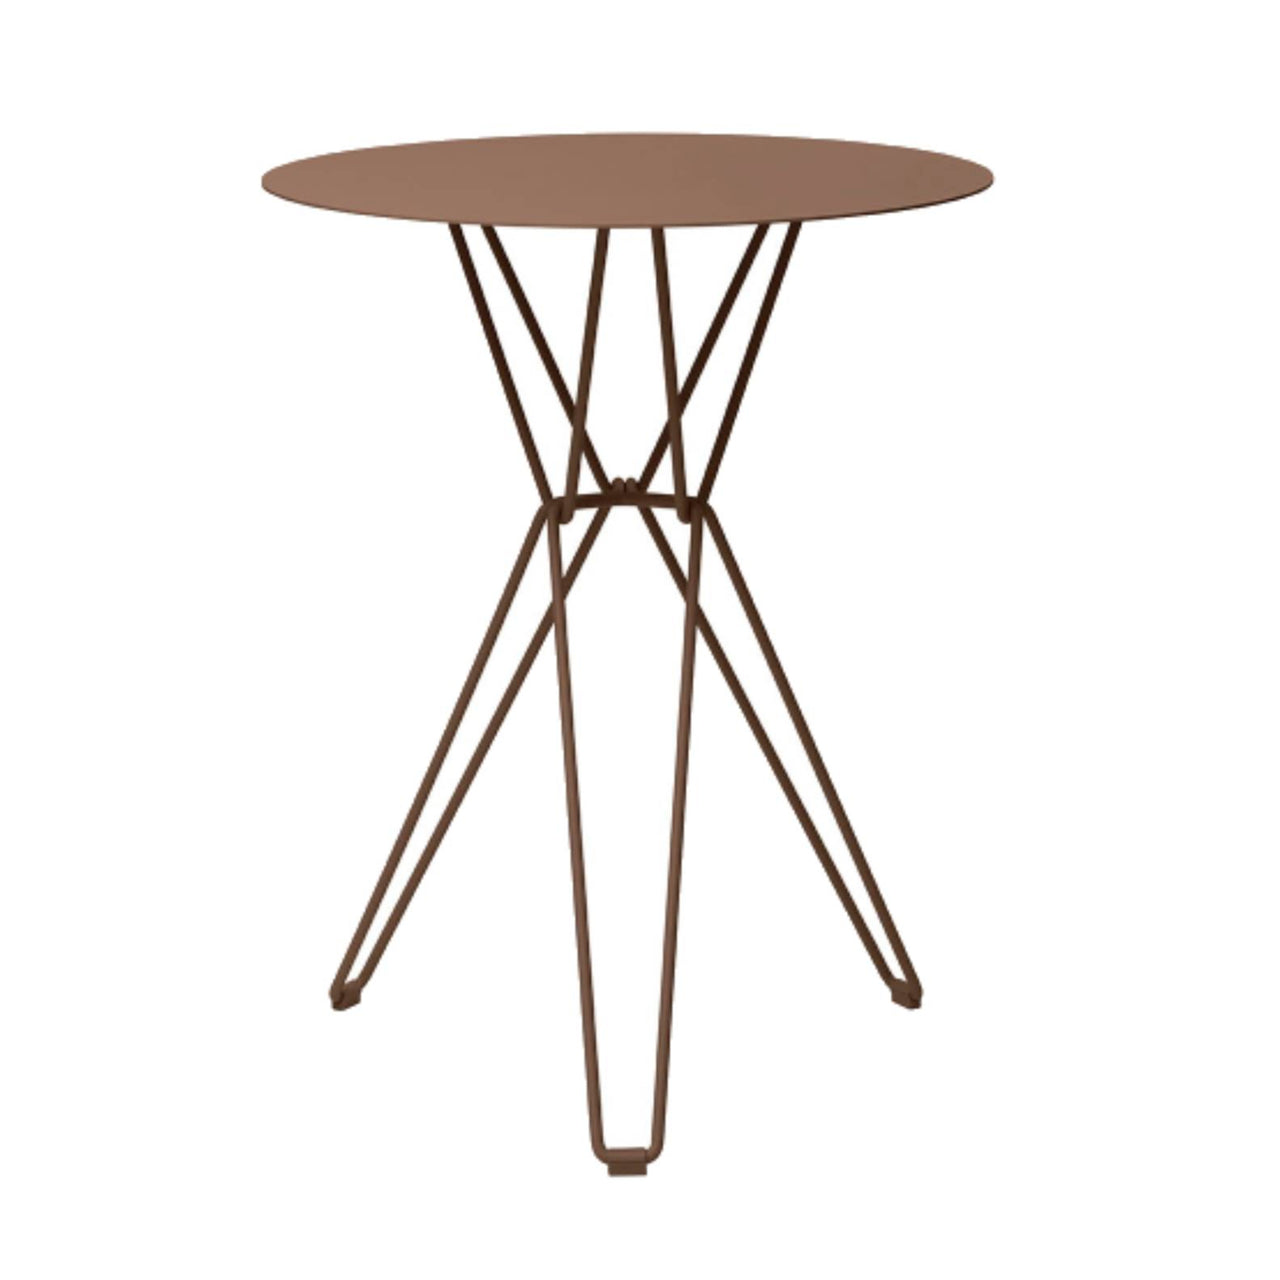 Tio Bar Table: Round + Pale Brown Metal